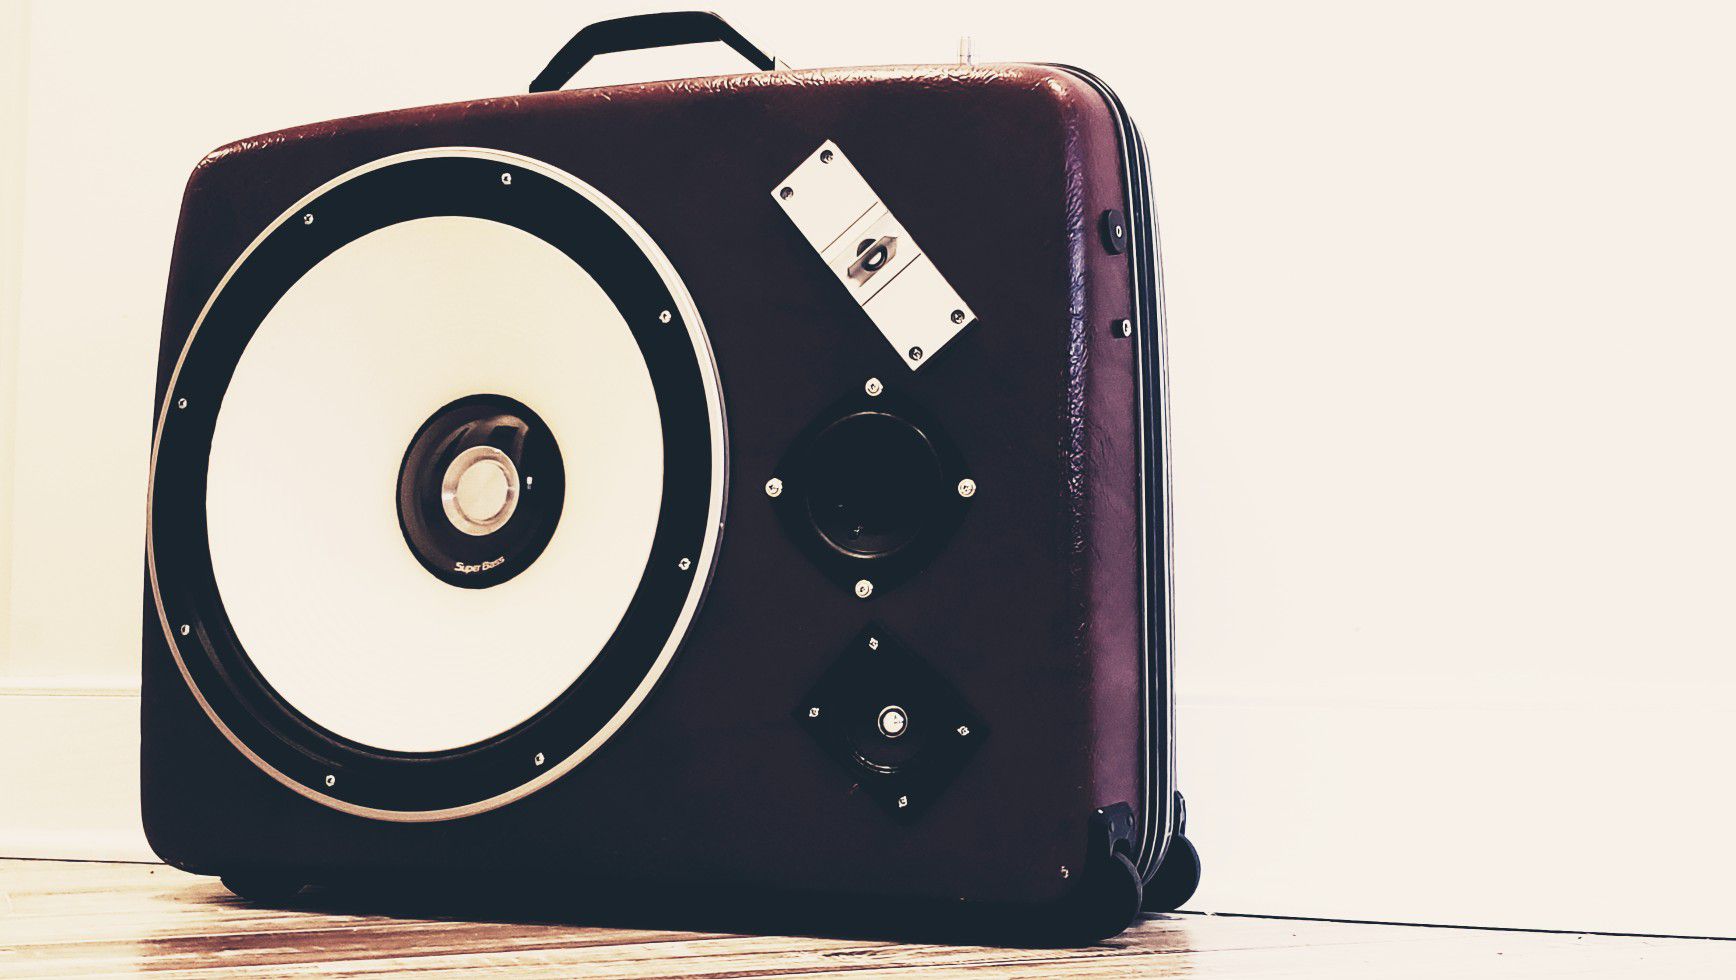 Vintage Suitcase Boombox Speaker System by ReSpeak